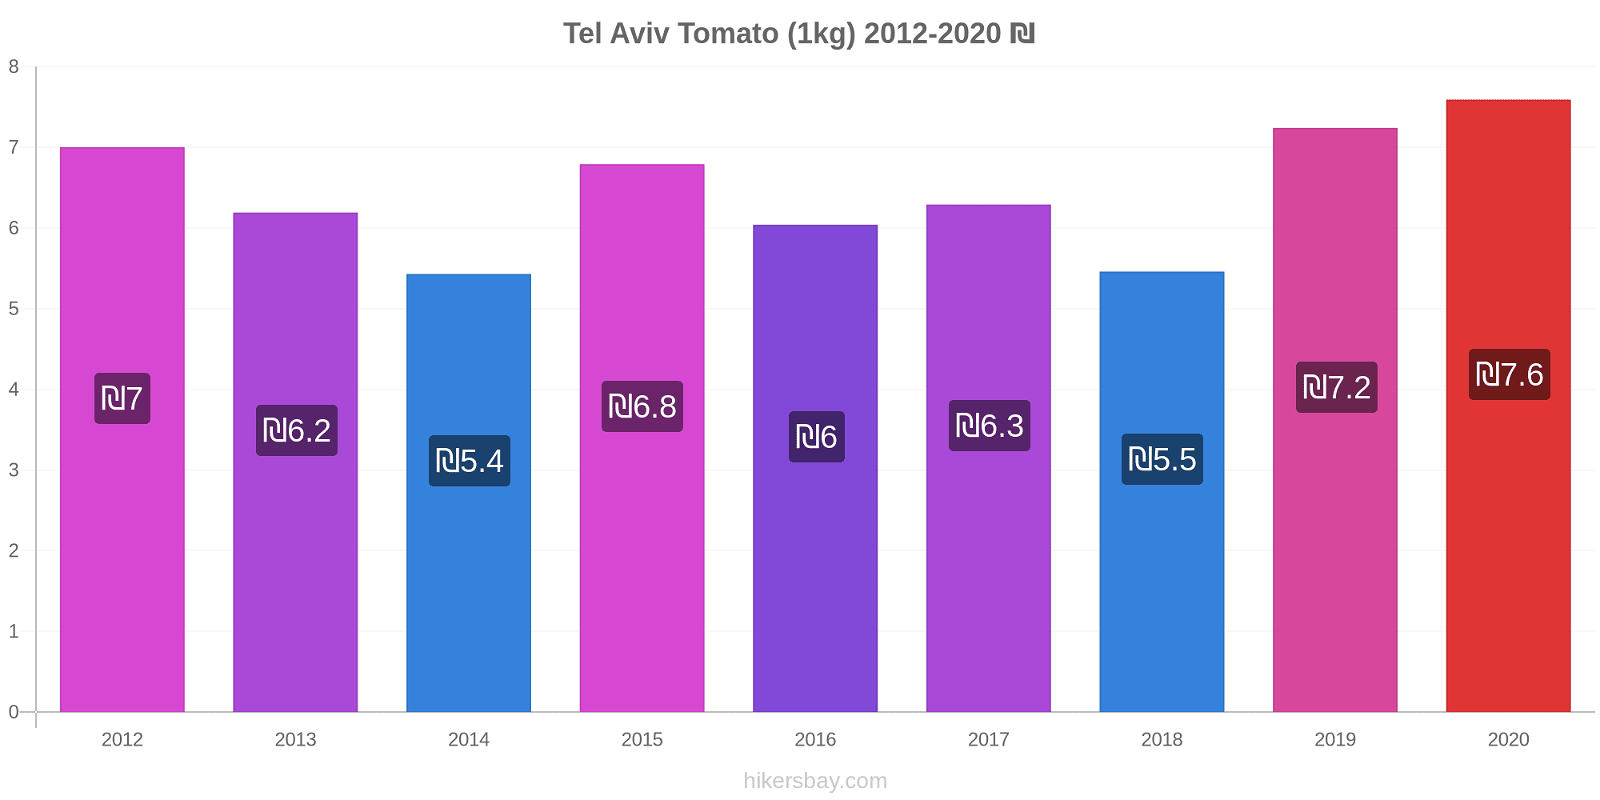 Tel Aviv price changes Tomato (1kg) hikersbay.com